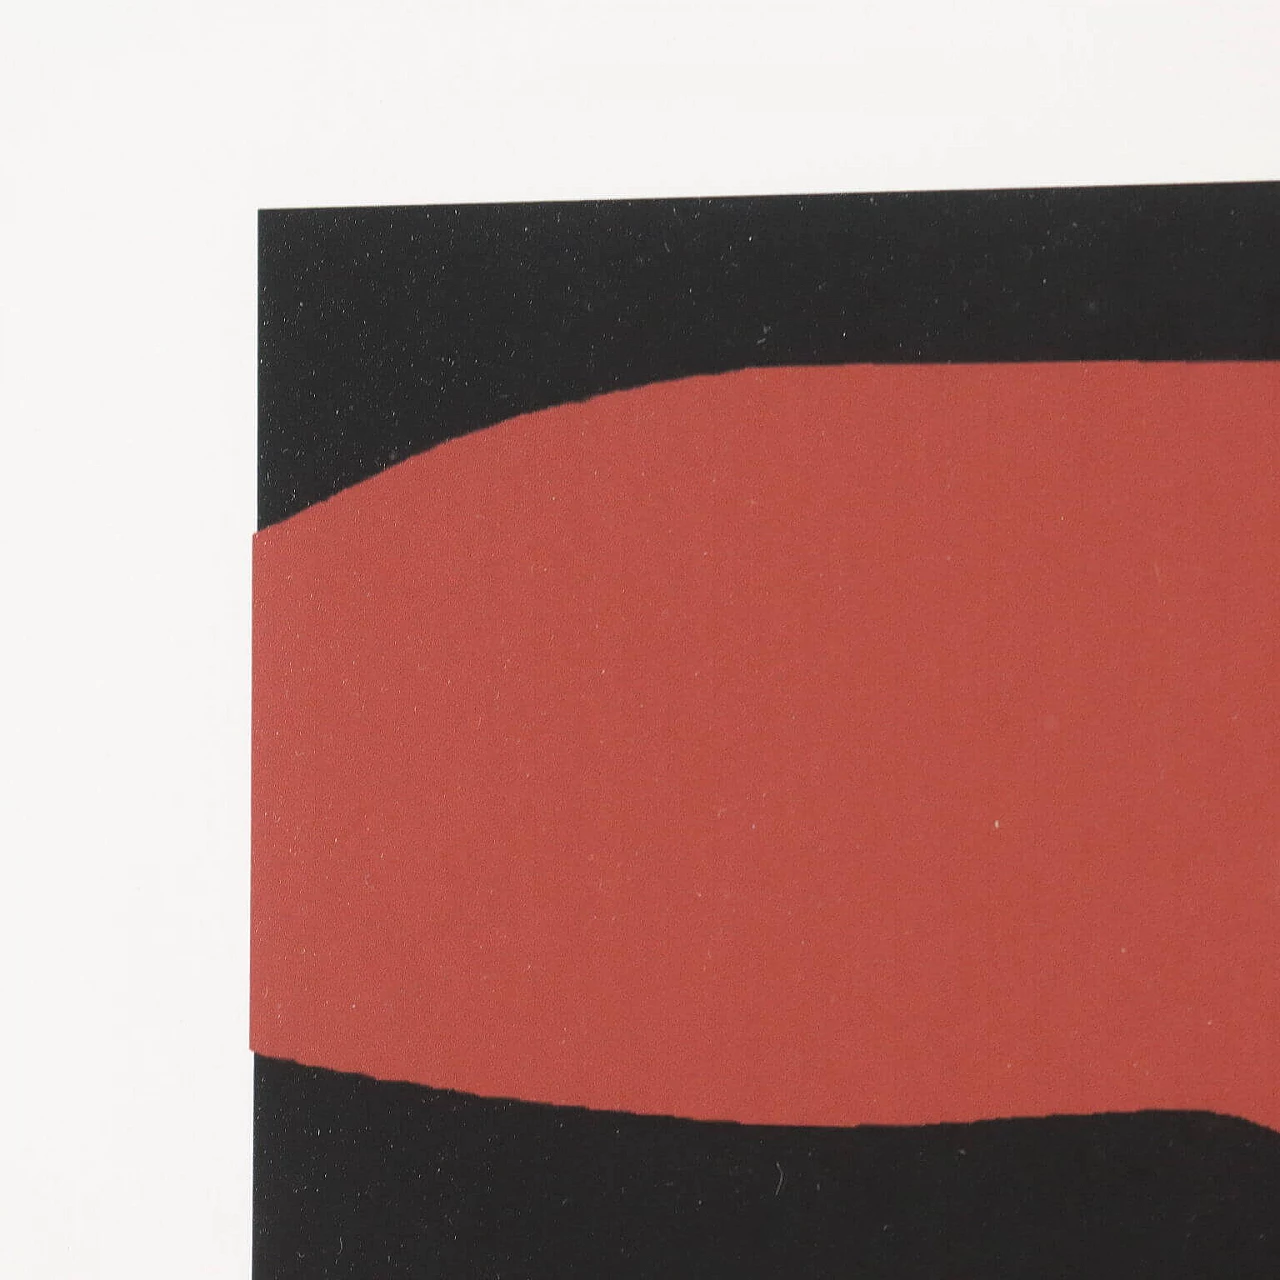 Alberto Burri, Sestante 14, color silkscreen print on paper, 1989 5